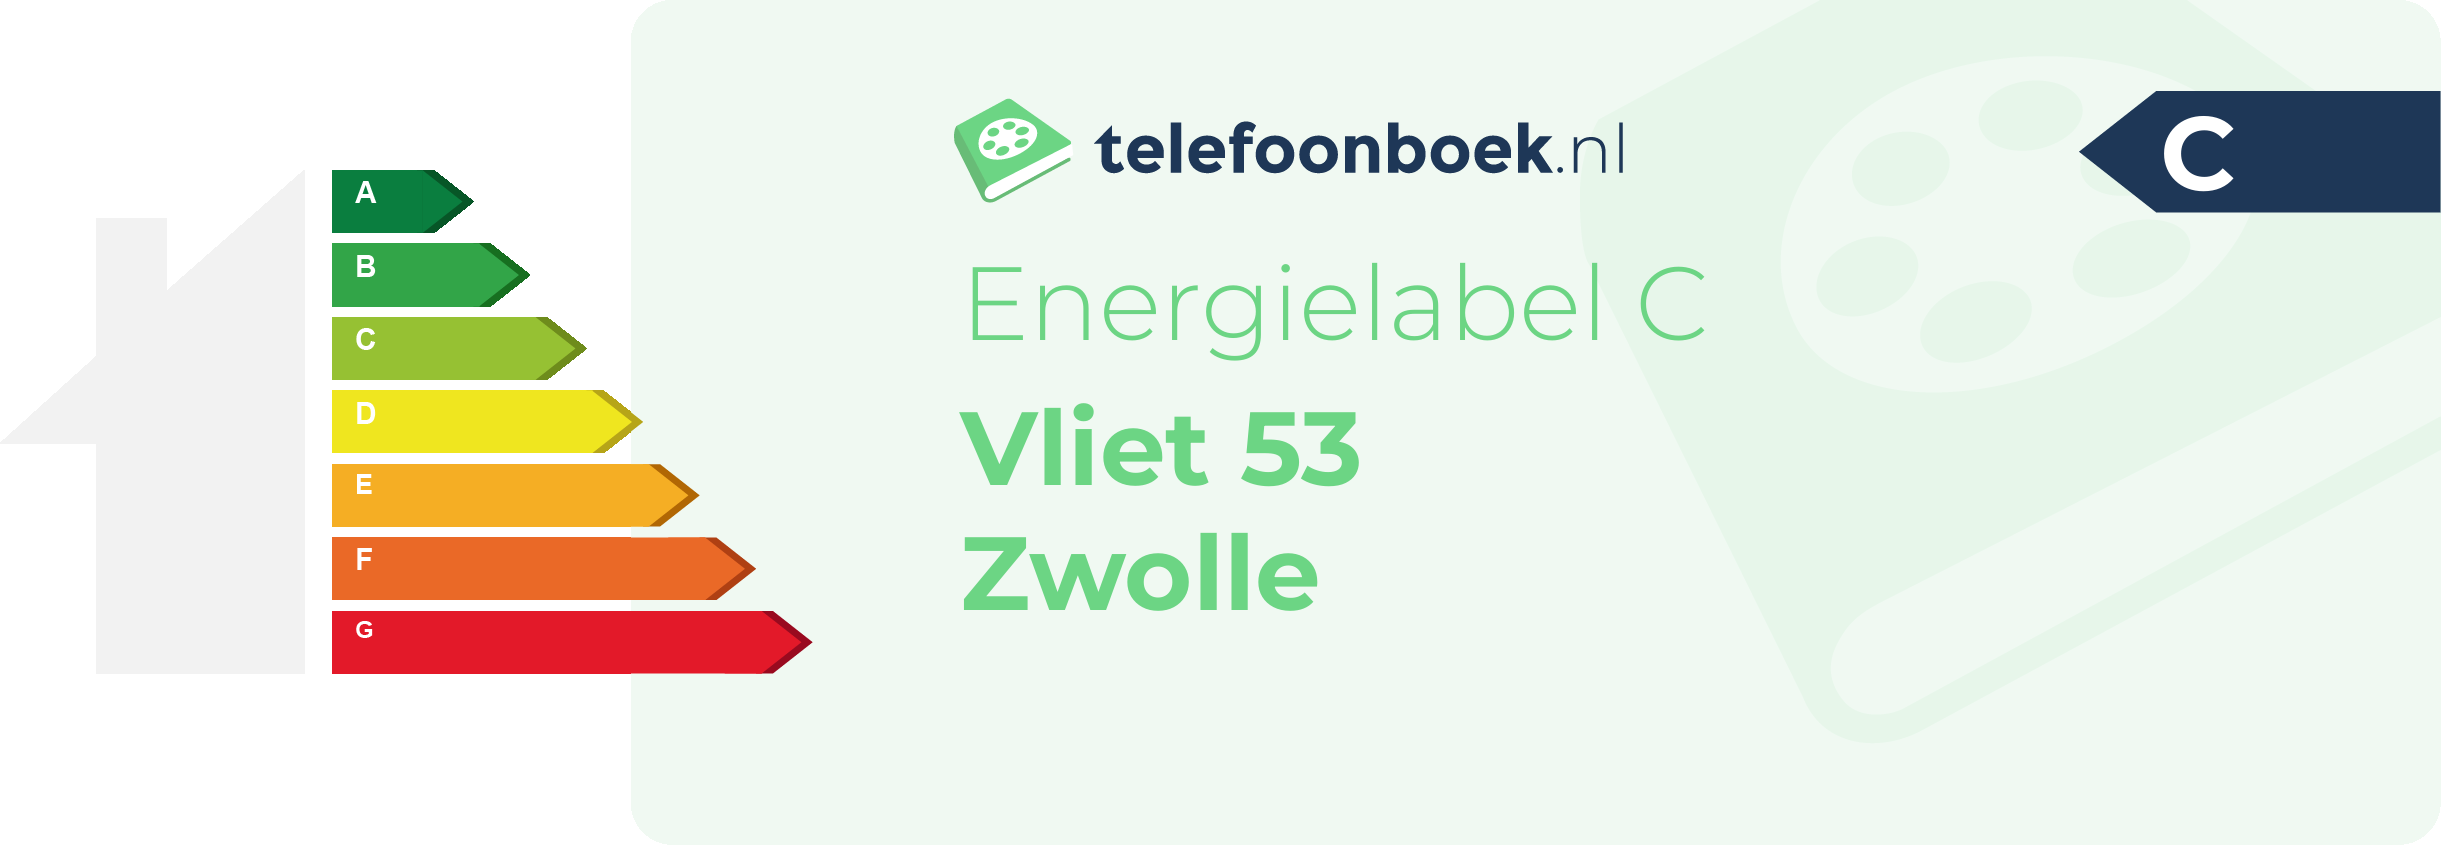 Energielabel Vliet 53 Zwolle